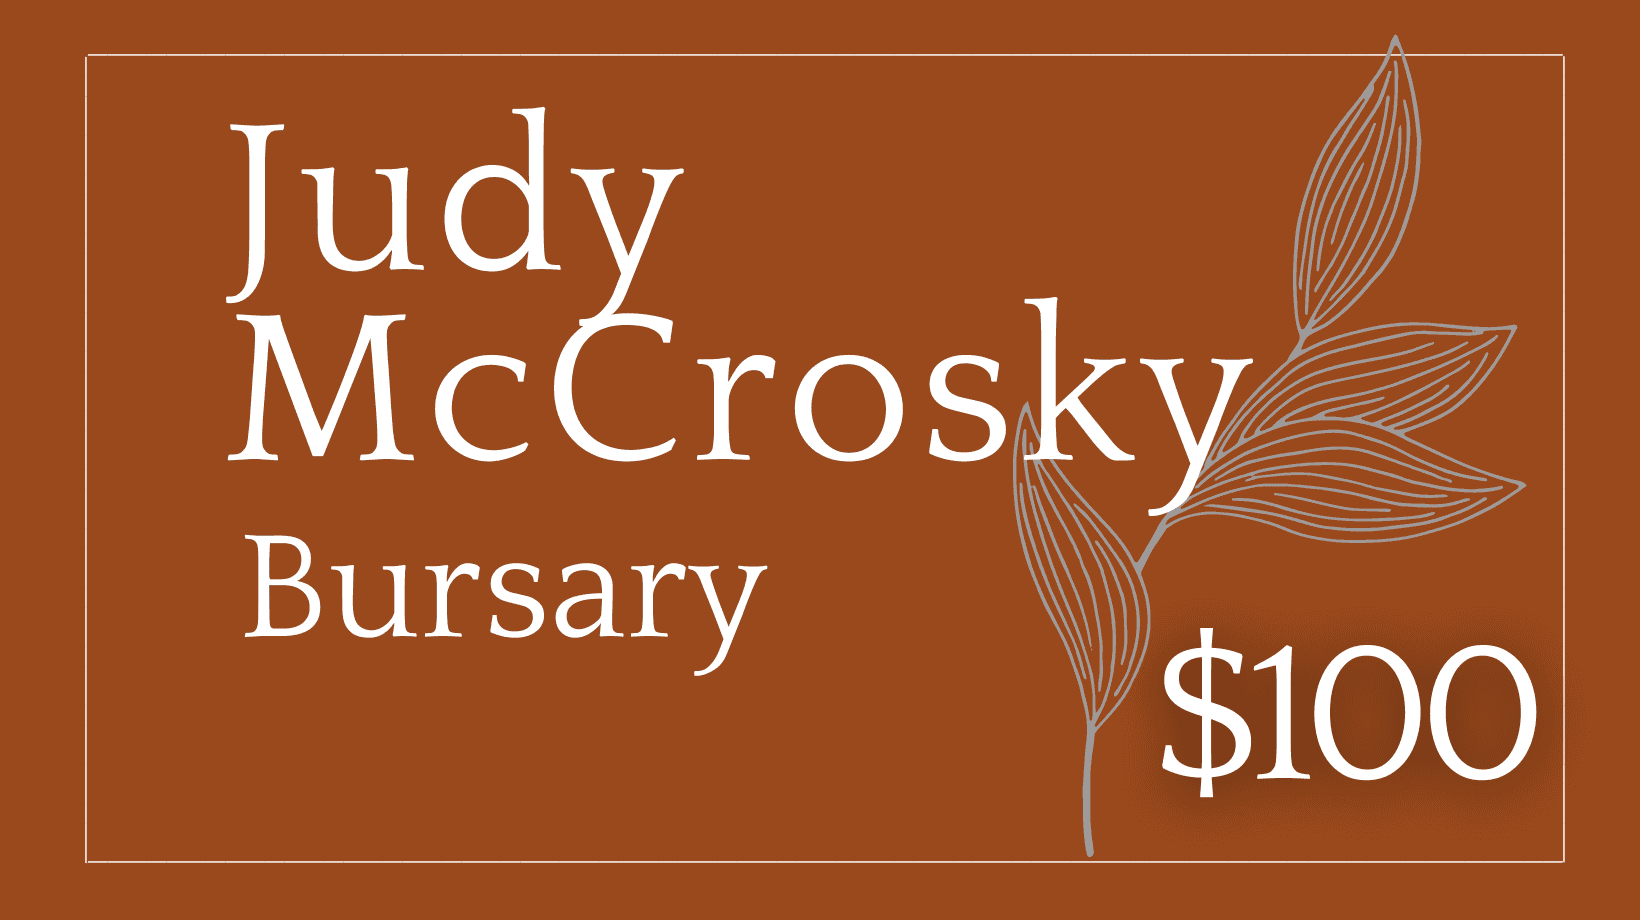 Judy McCrosky Bursary supporting image.